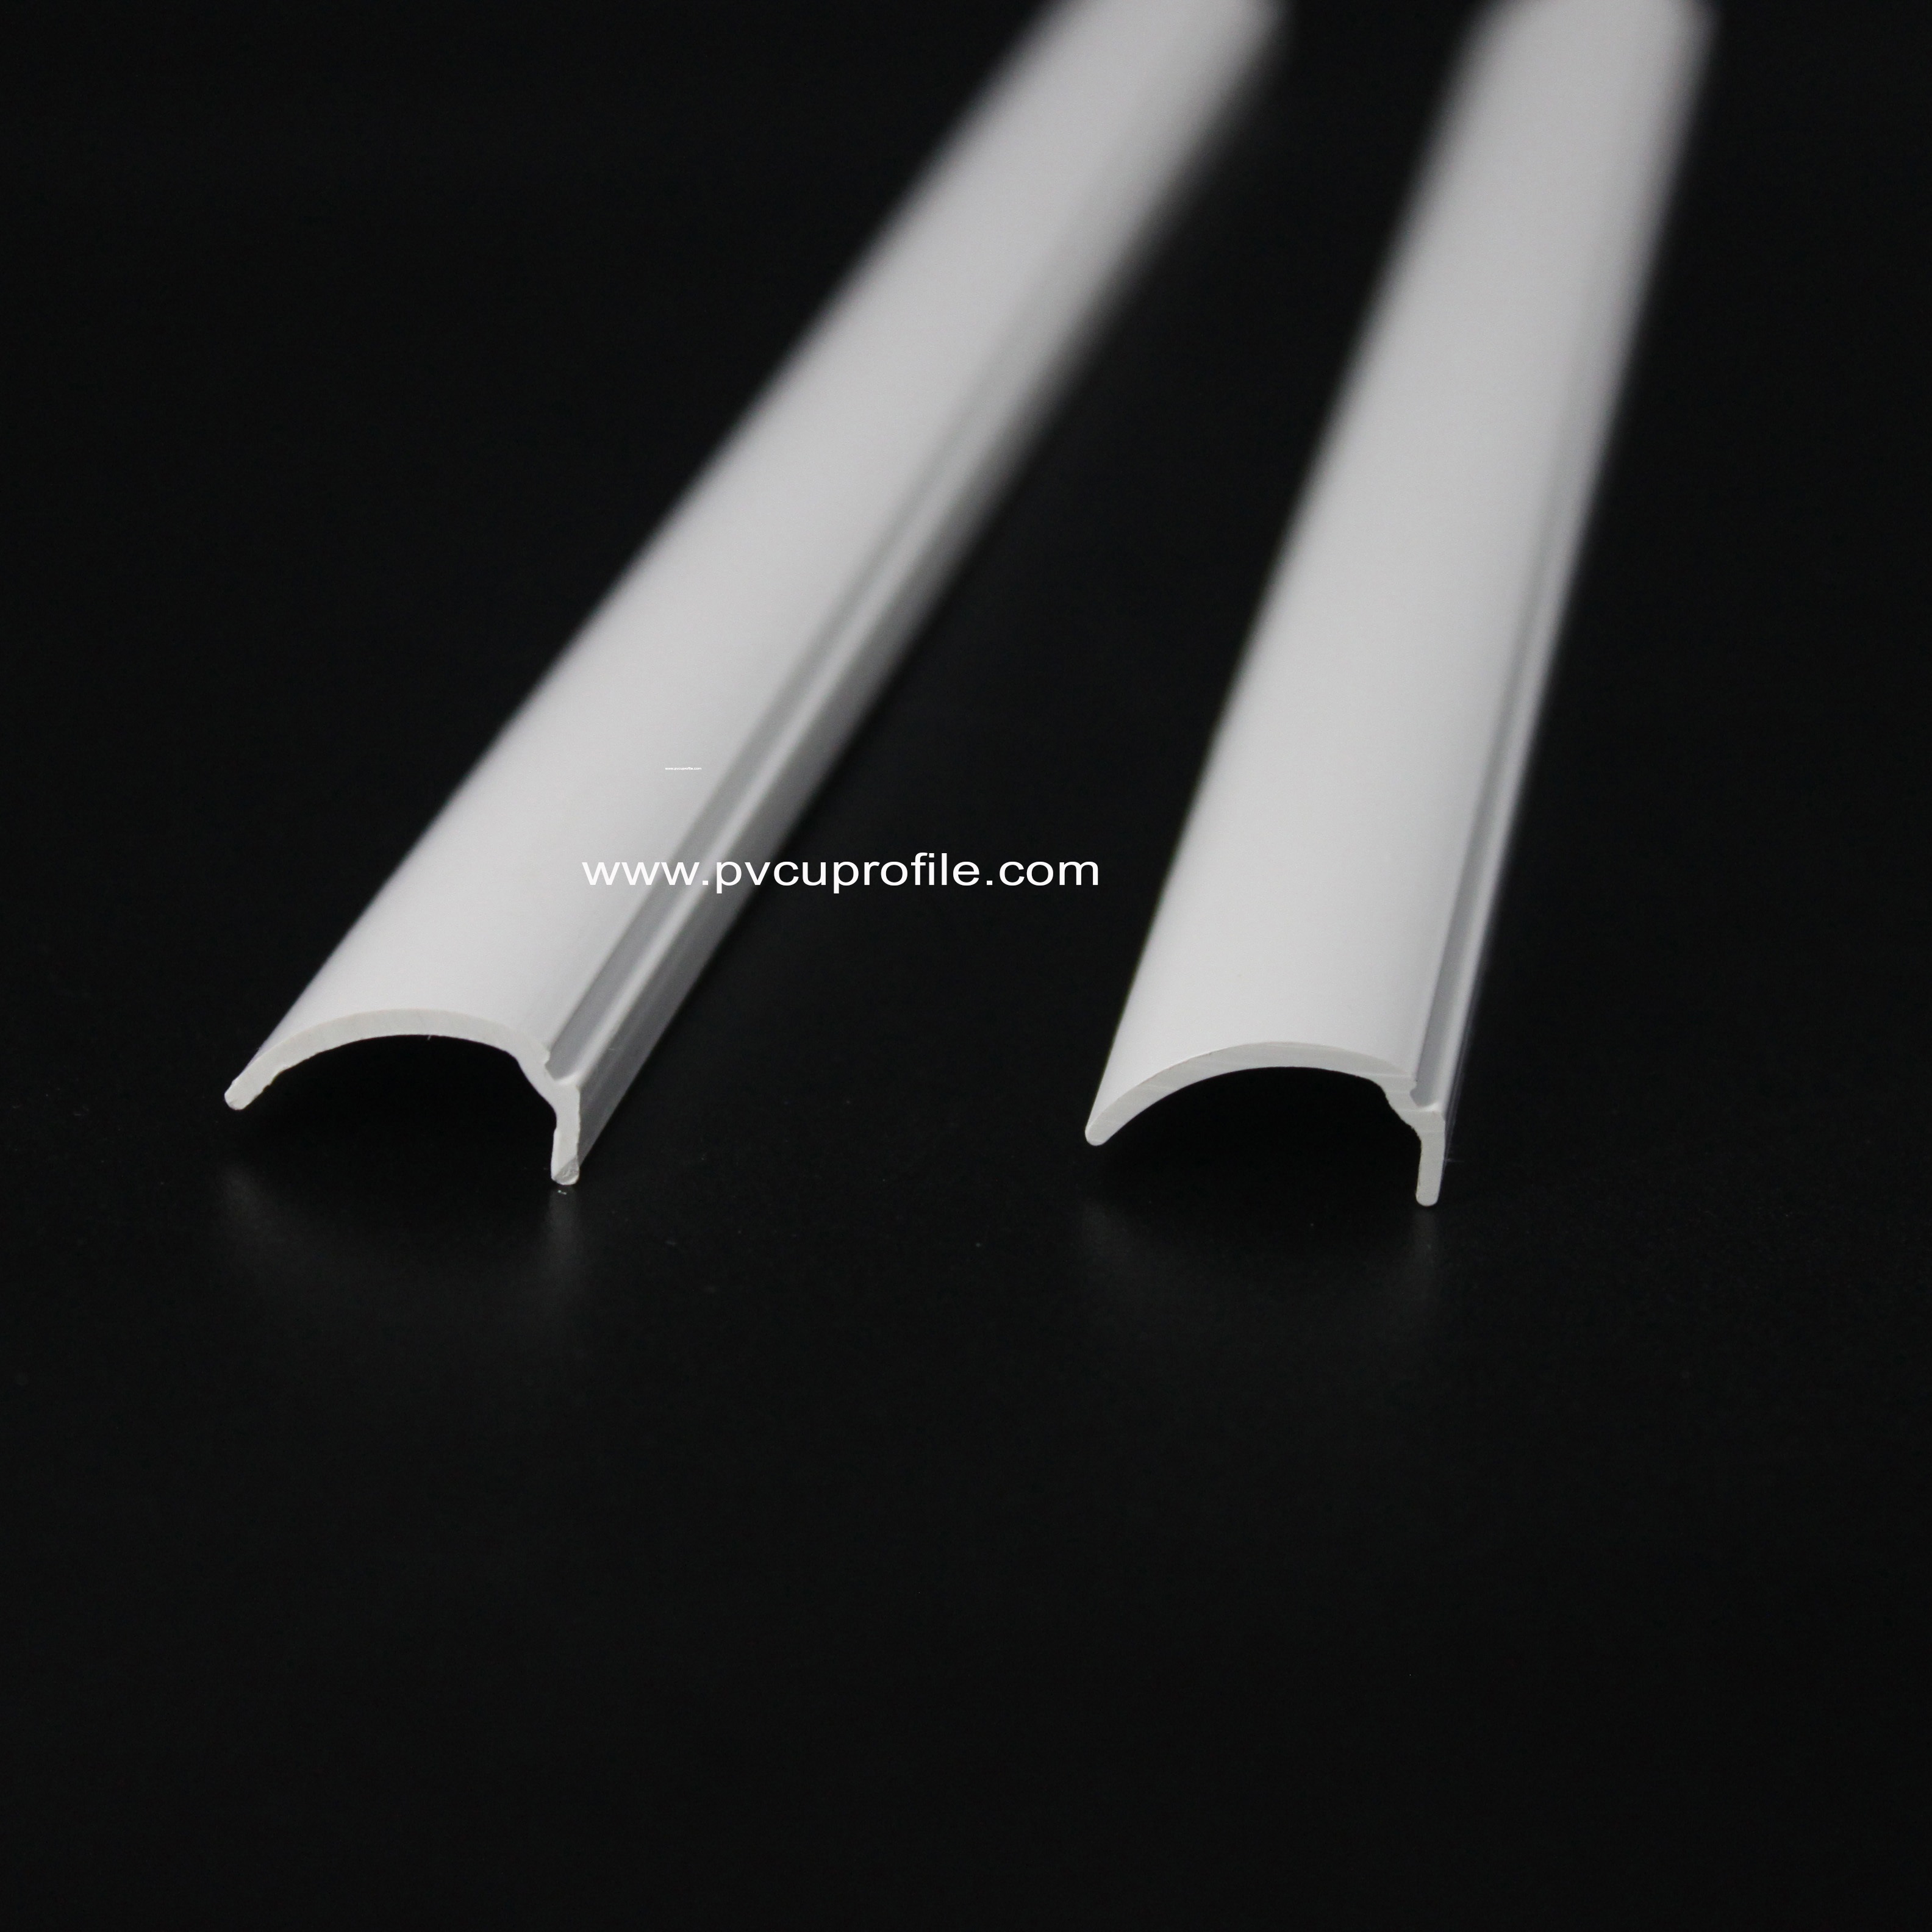 Americano Linea PVC Ventanda de PVC-Profile